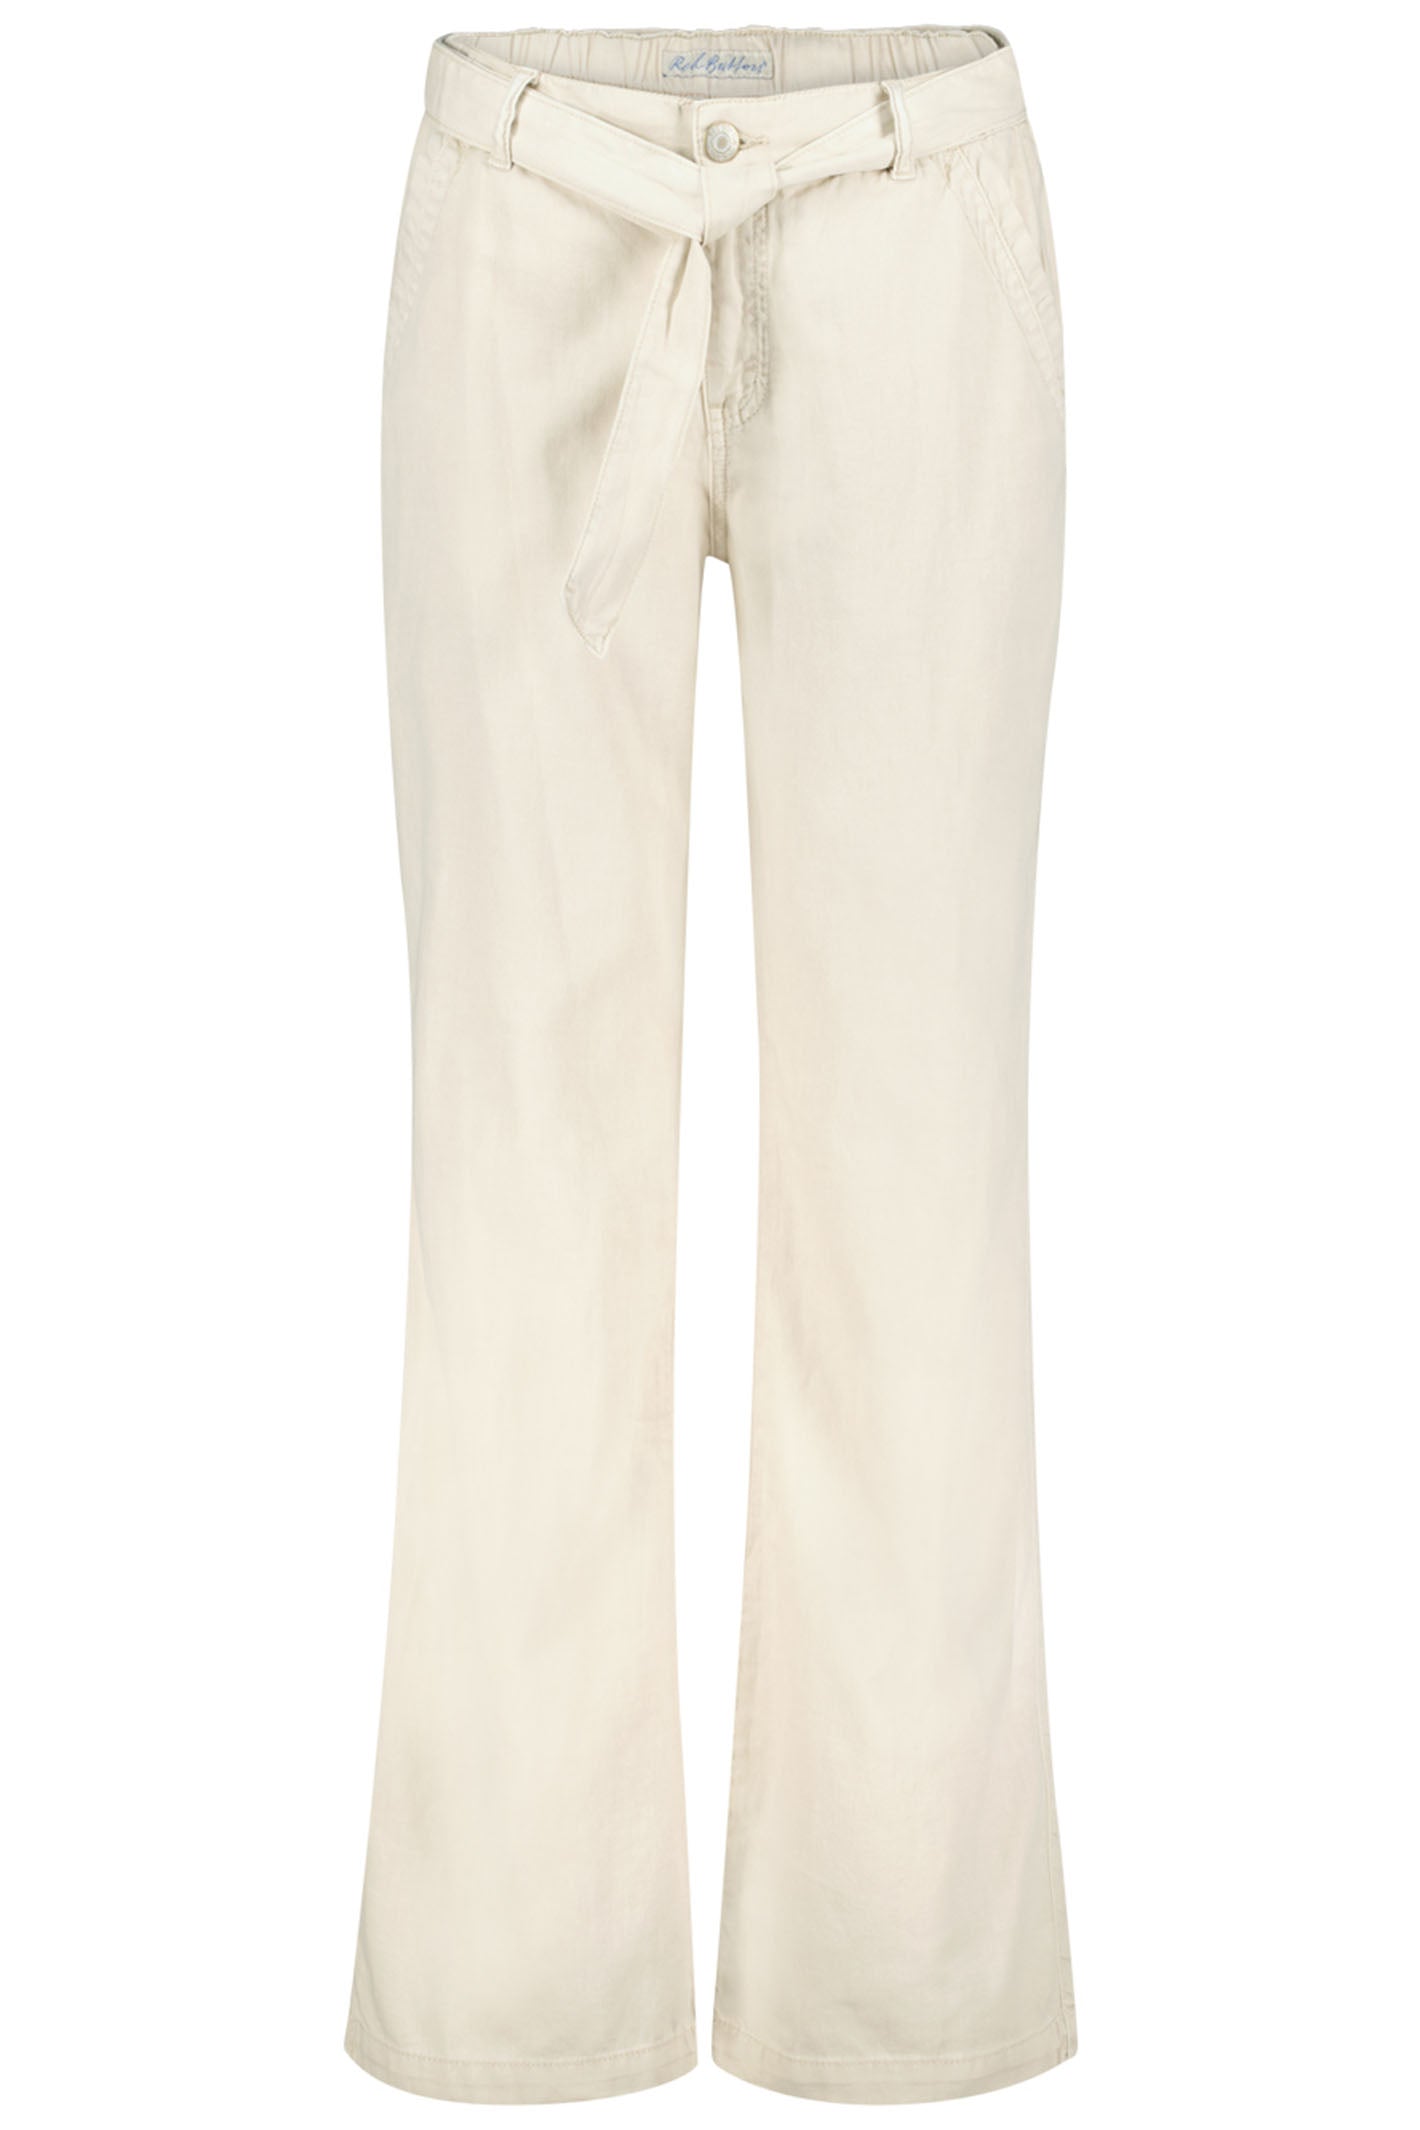 Red Button SRB4169A Colette Pearl Cream Cotton Linen Trousers 69cm